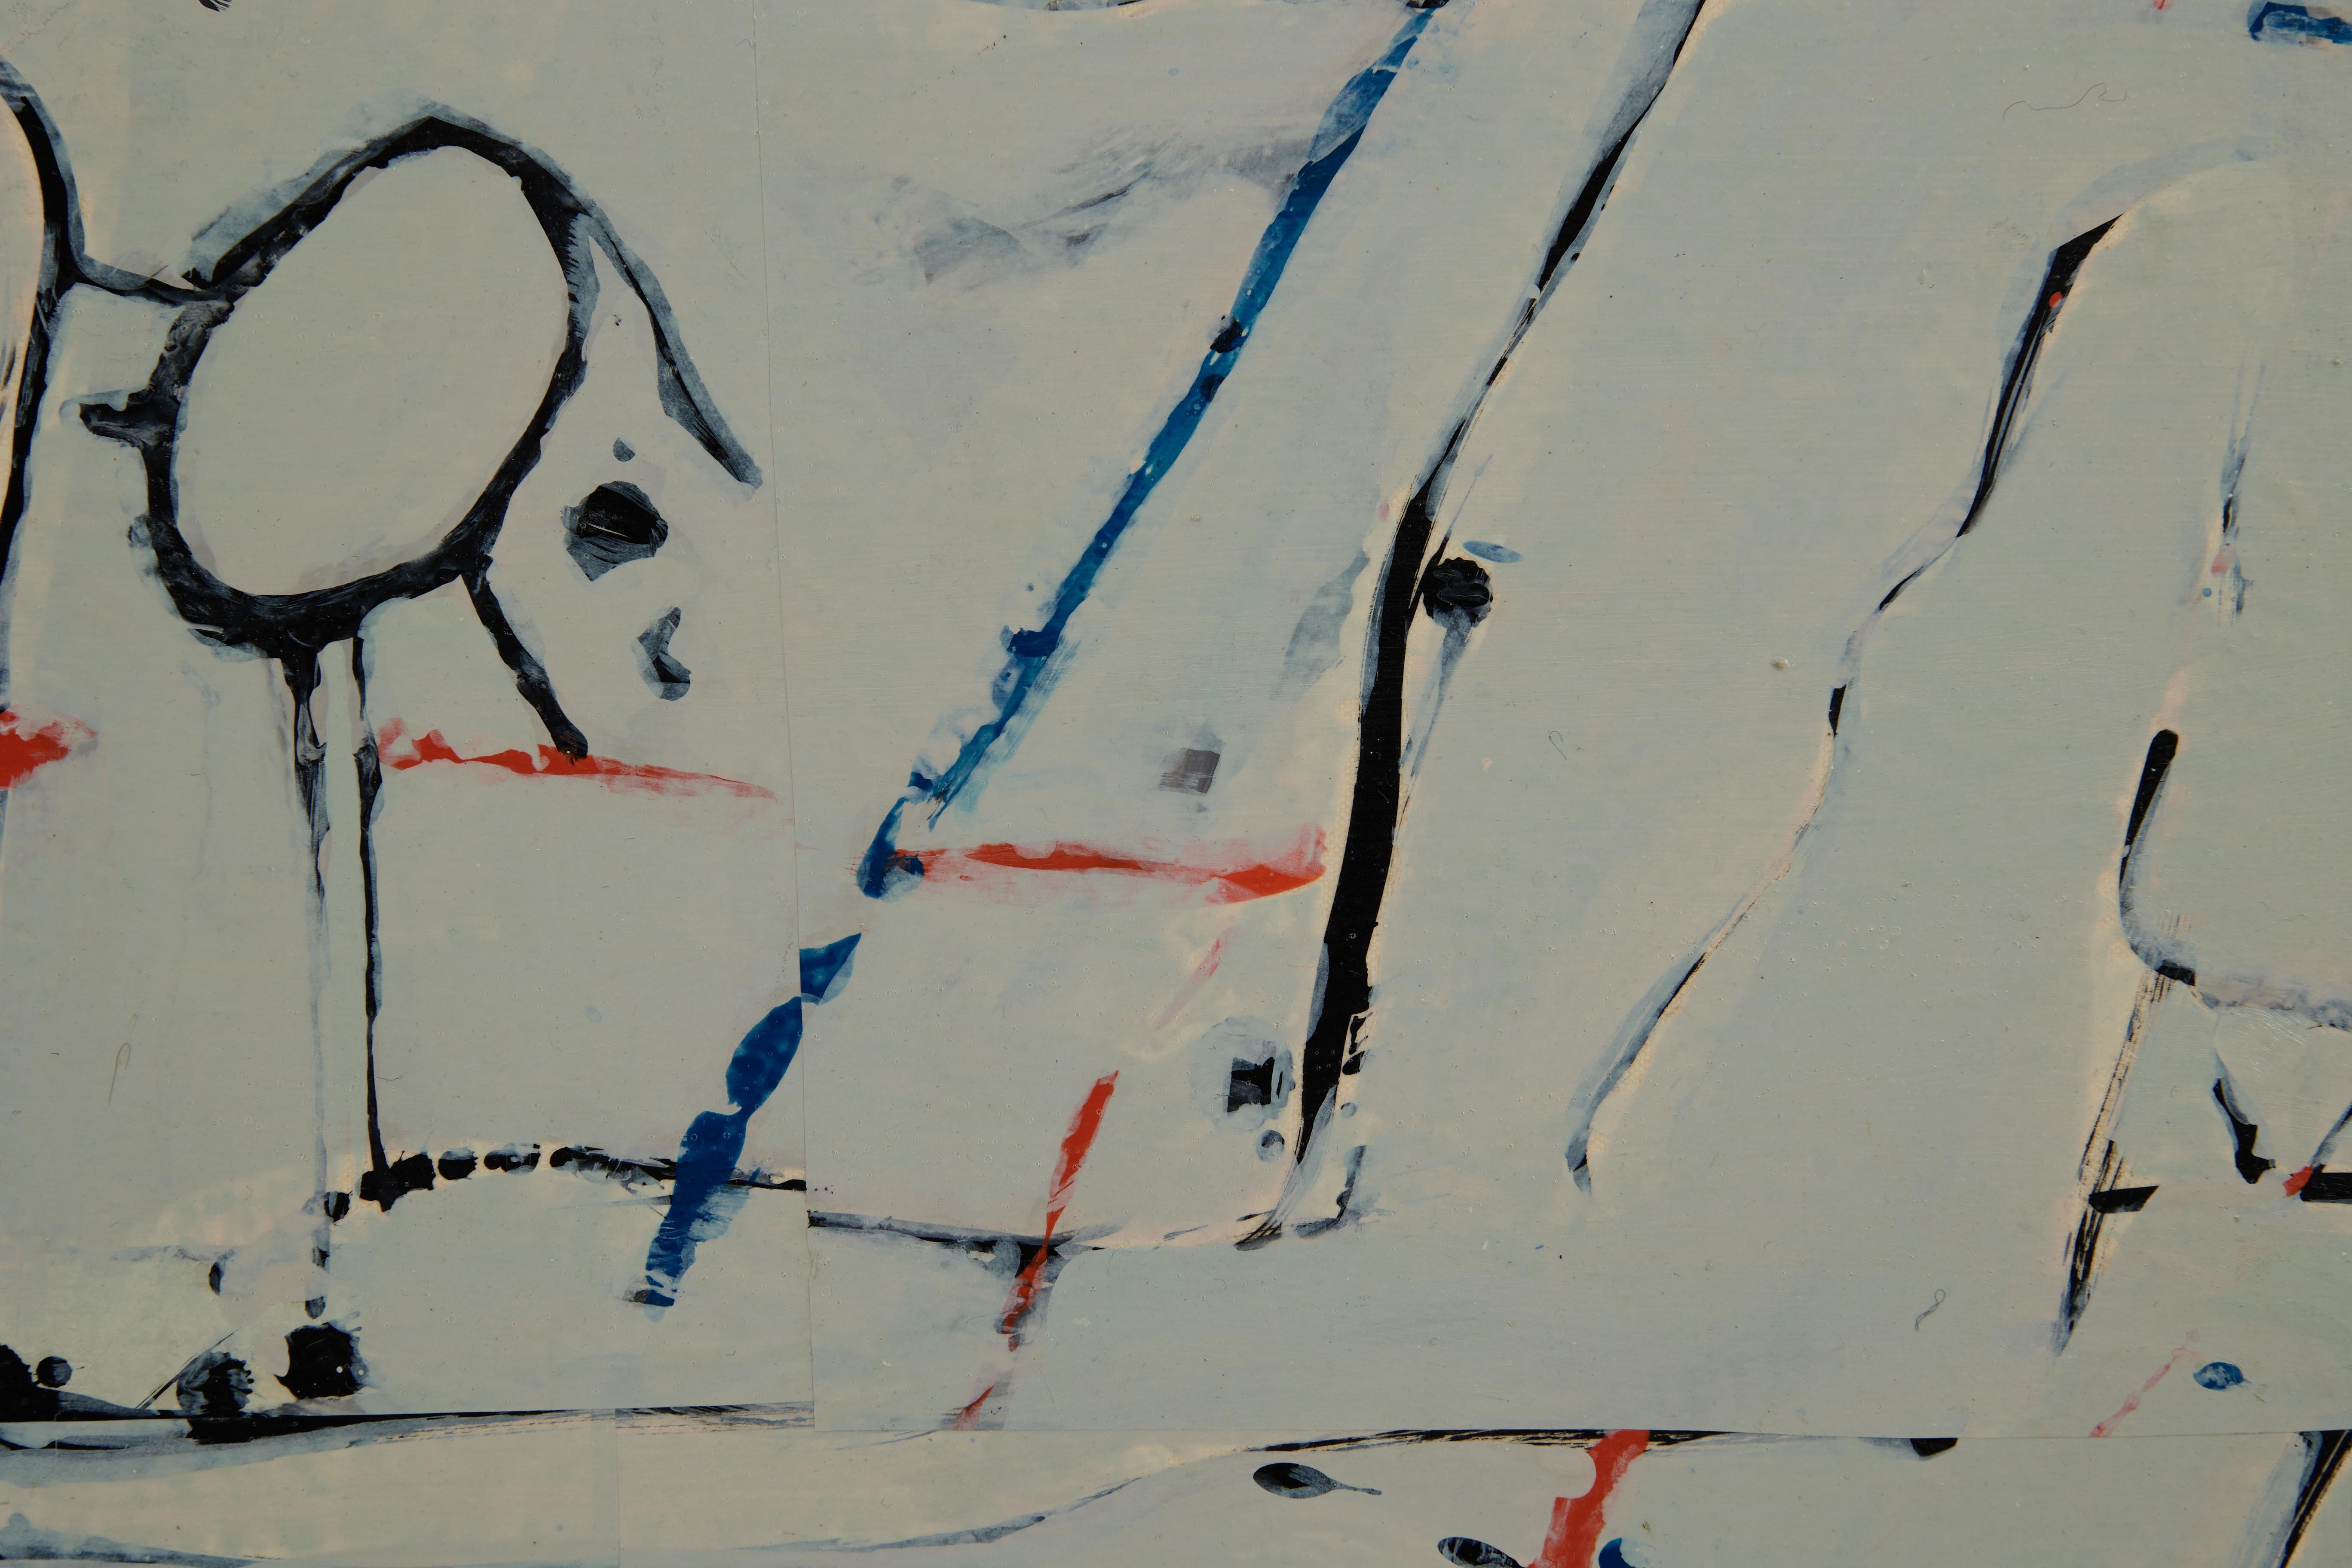 Reflections, großes abstraktes expressionistisches Gemälde des Künstlers der Cleveland School (Abstrakter Expressionismus), Painting, von Richard Andres